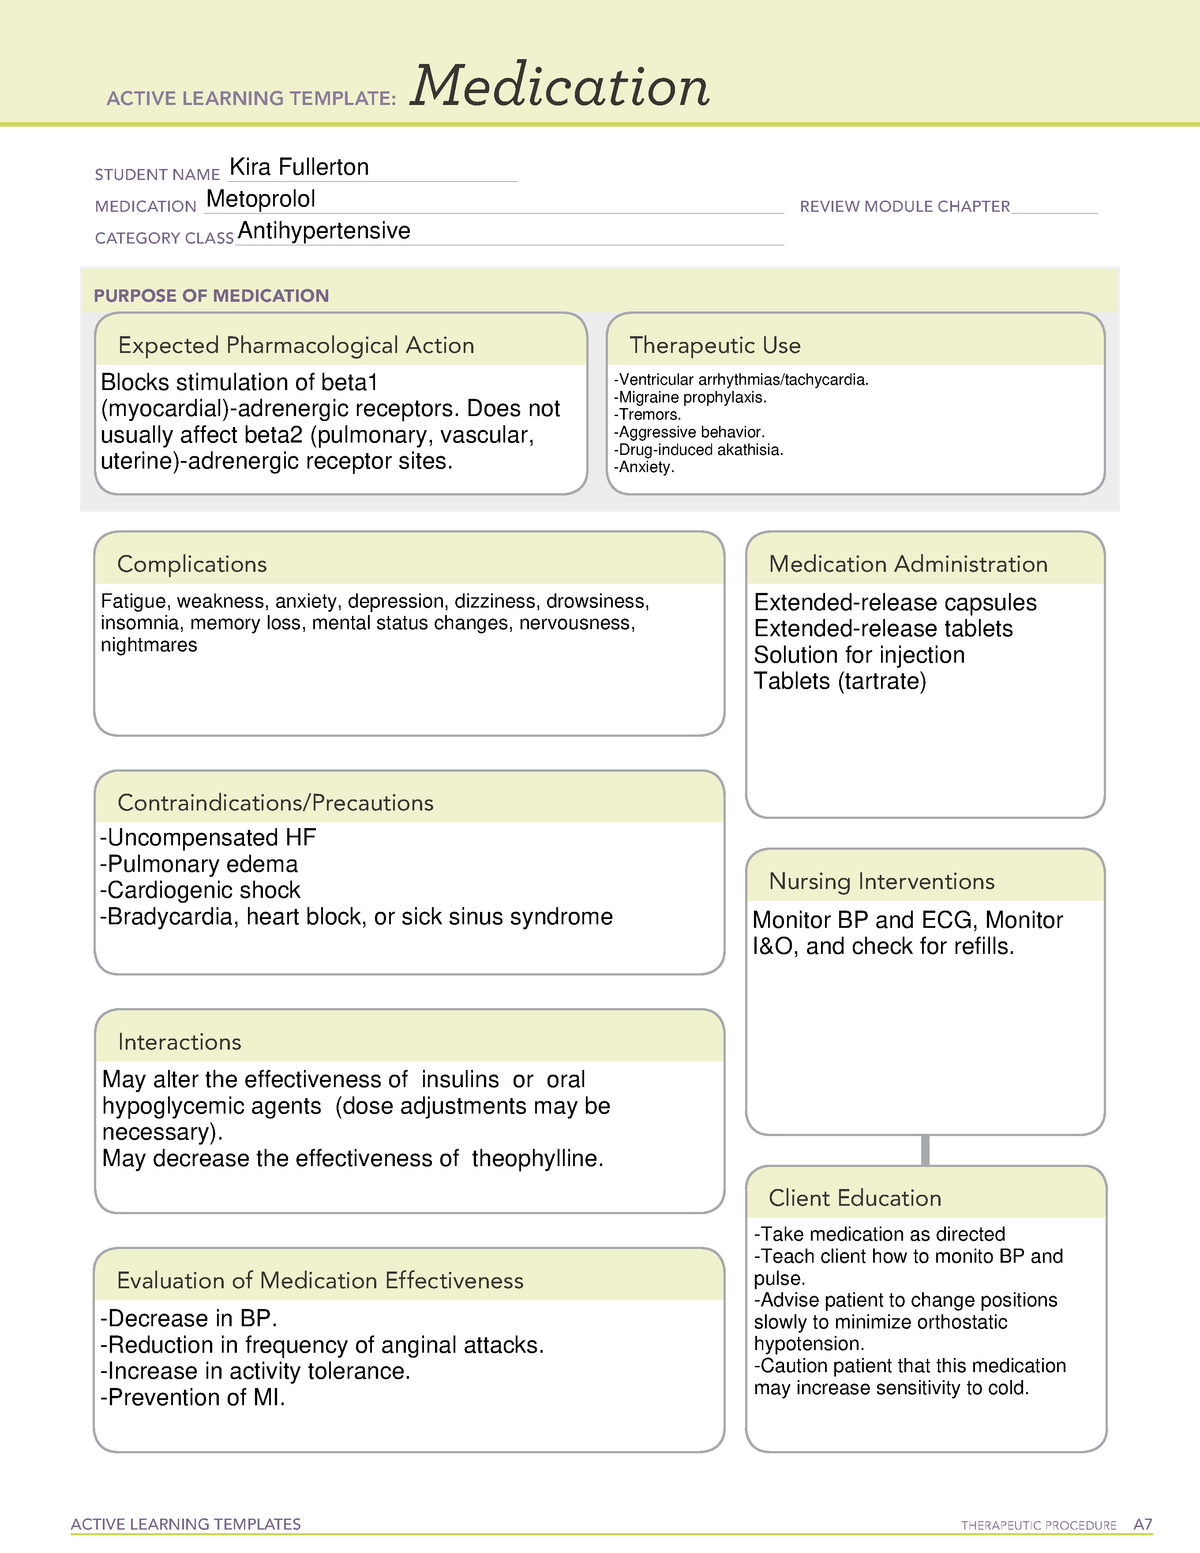 MED Metoprolol ATI medications sheet ACTIVE LEARNING TEMPLATES